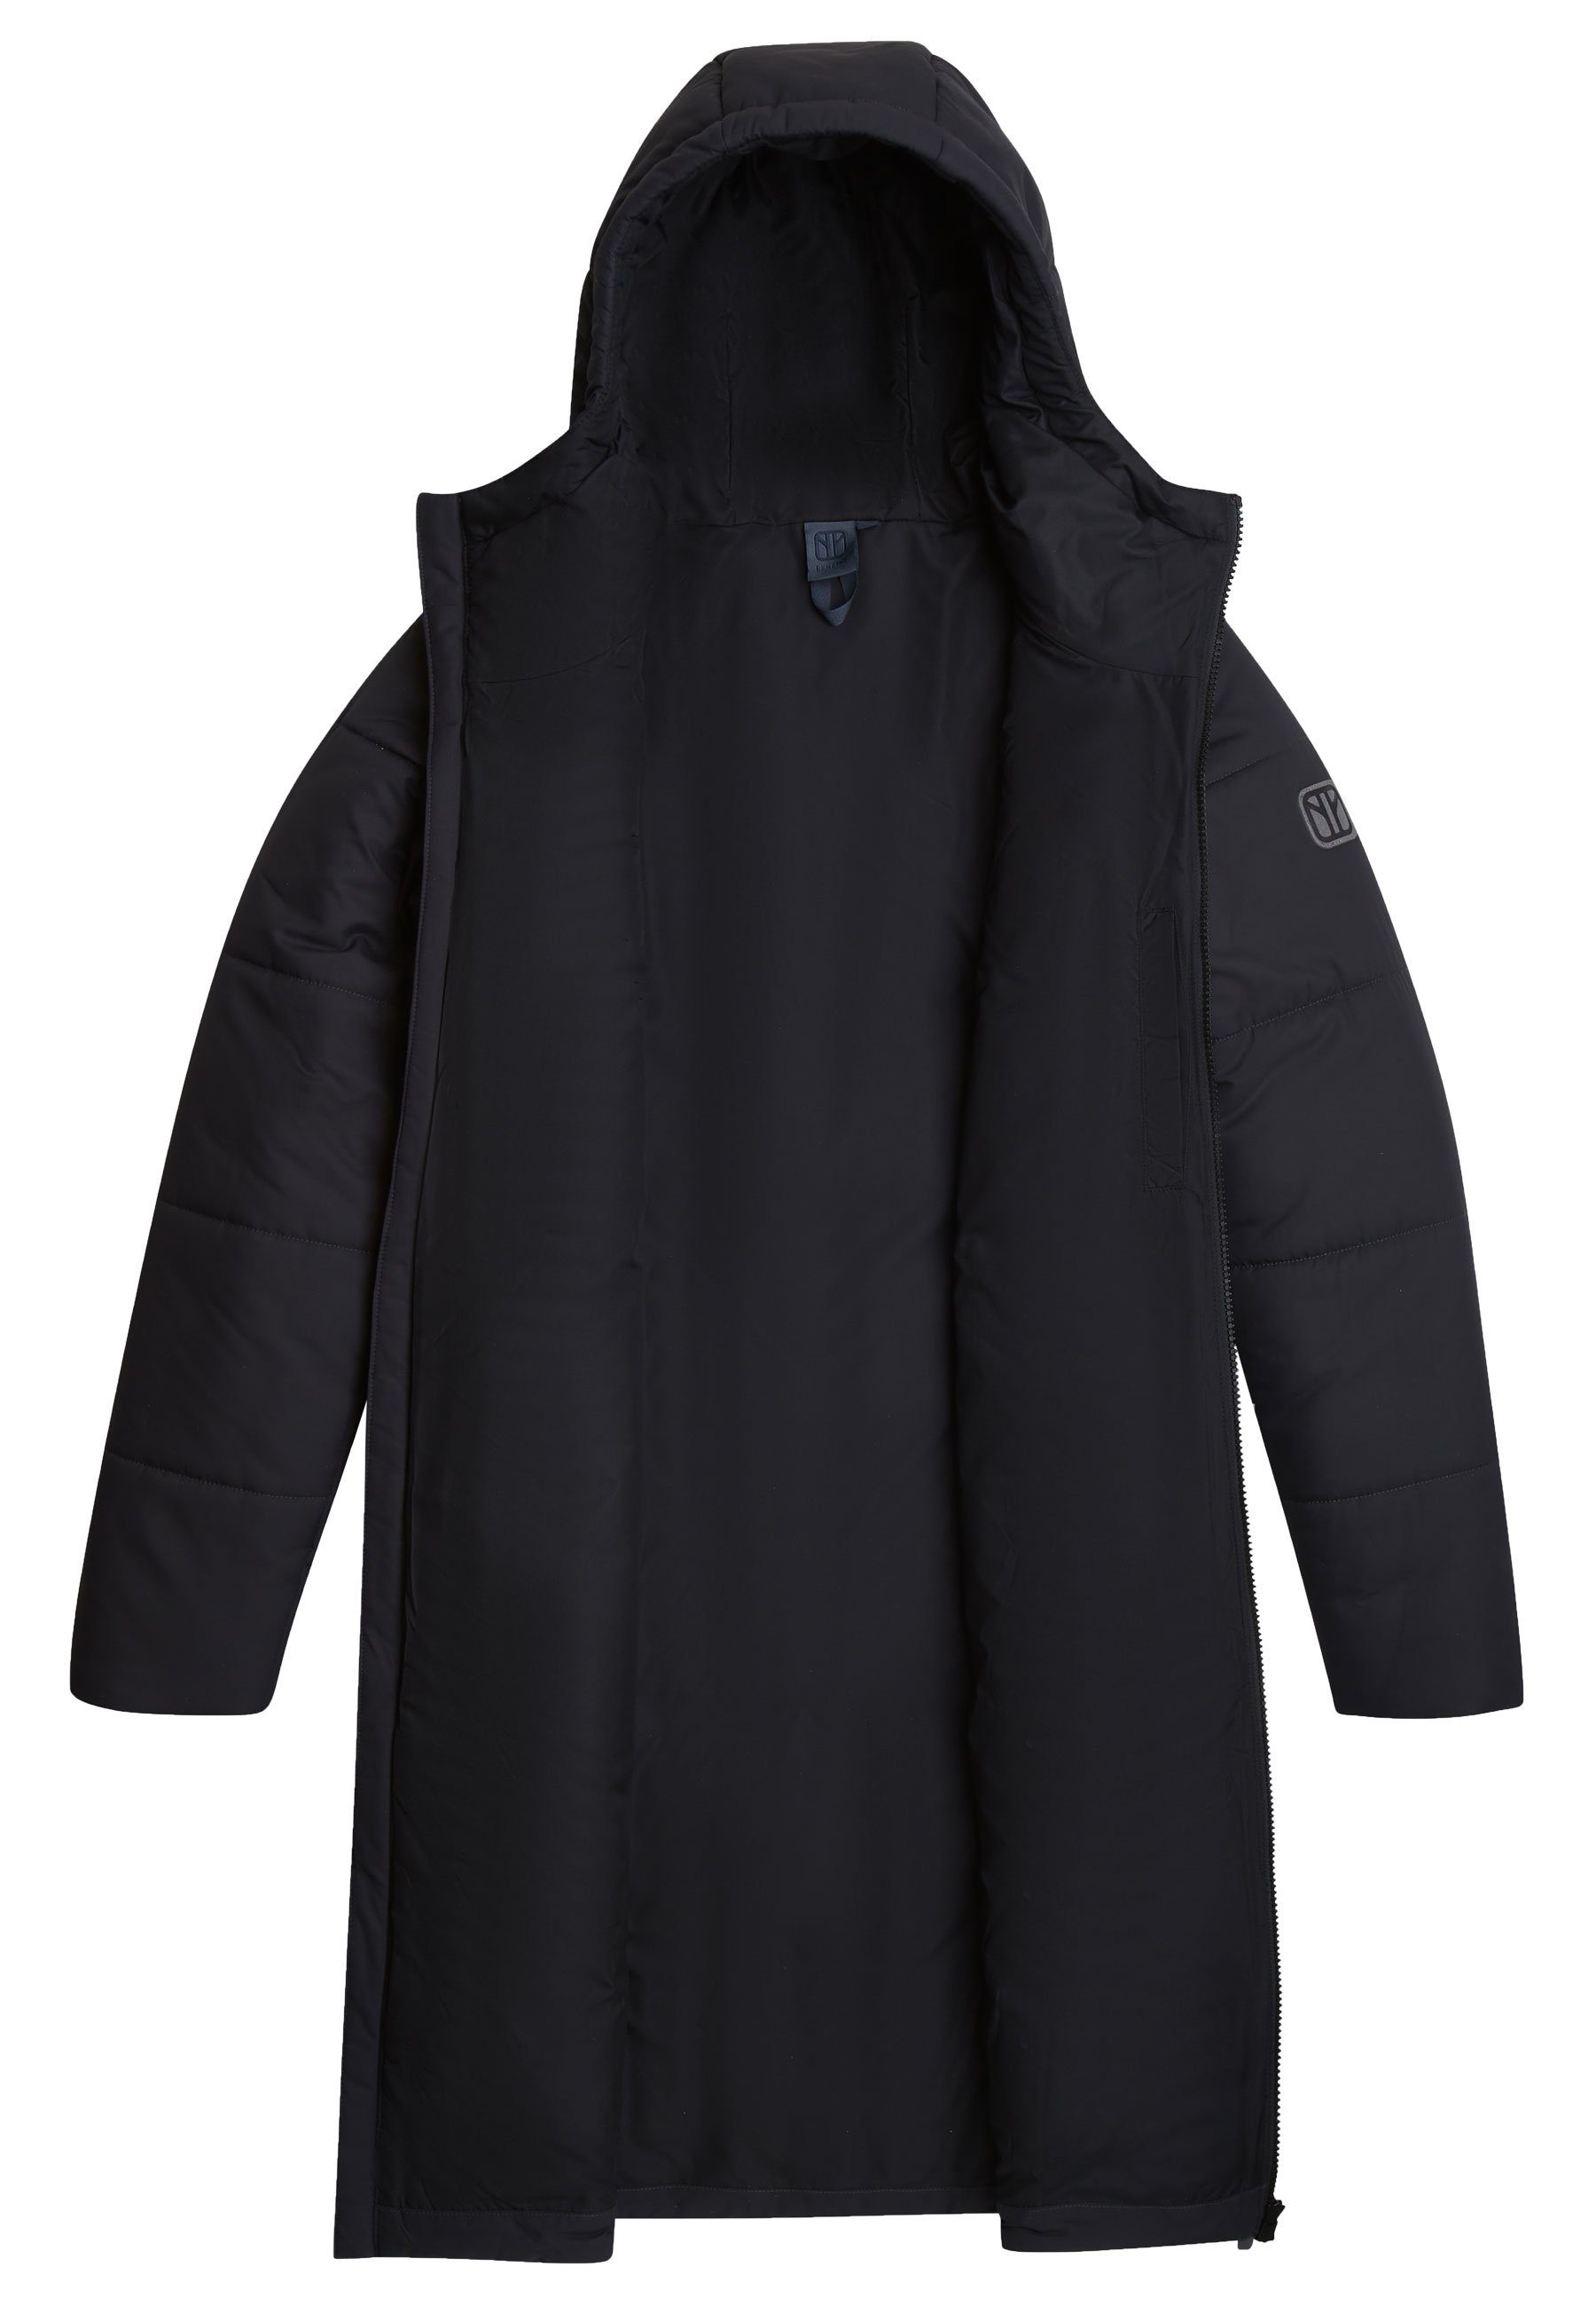 Winterjacke Comfort leichter black 2-Wege-Reißverschluss Mantel, black - Elkline langer